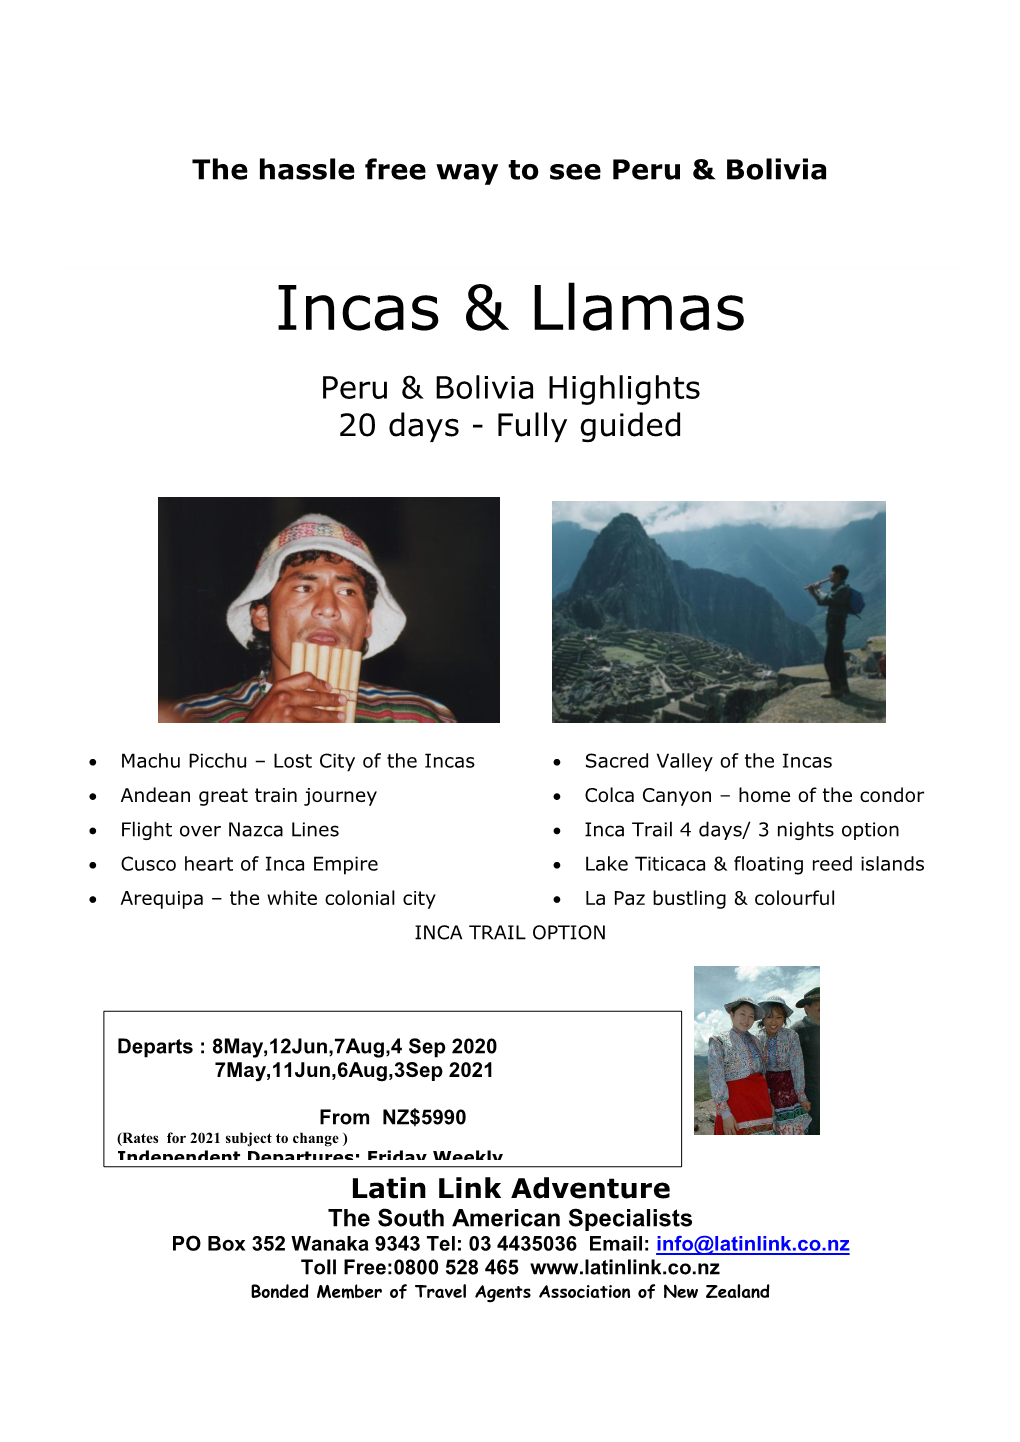 The Hassle Free Way to See Peru & Bolivia